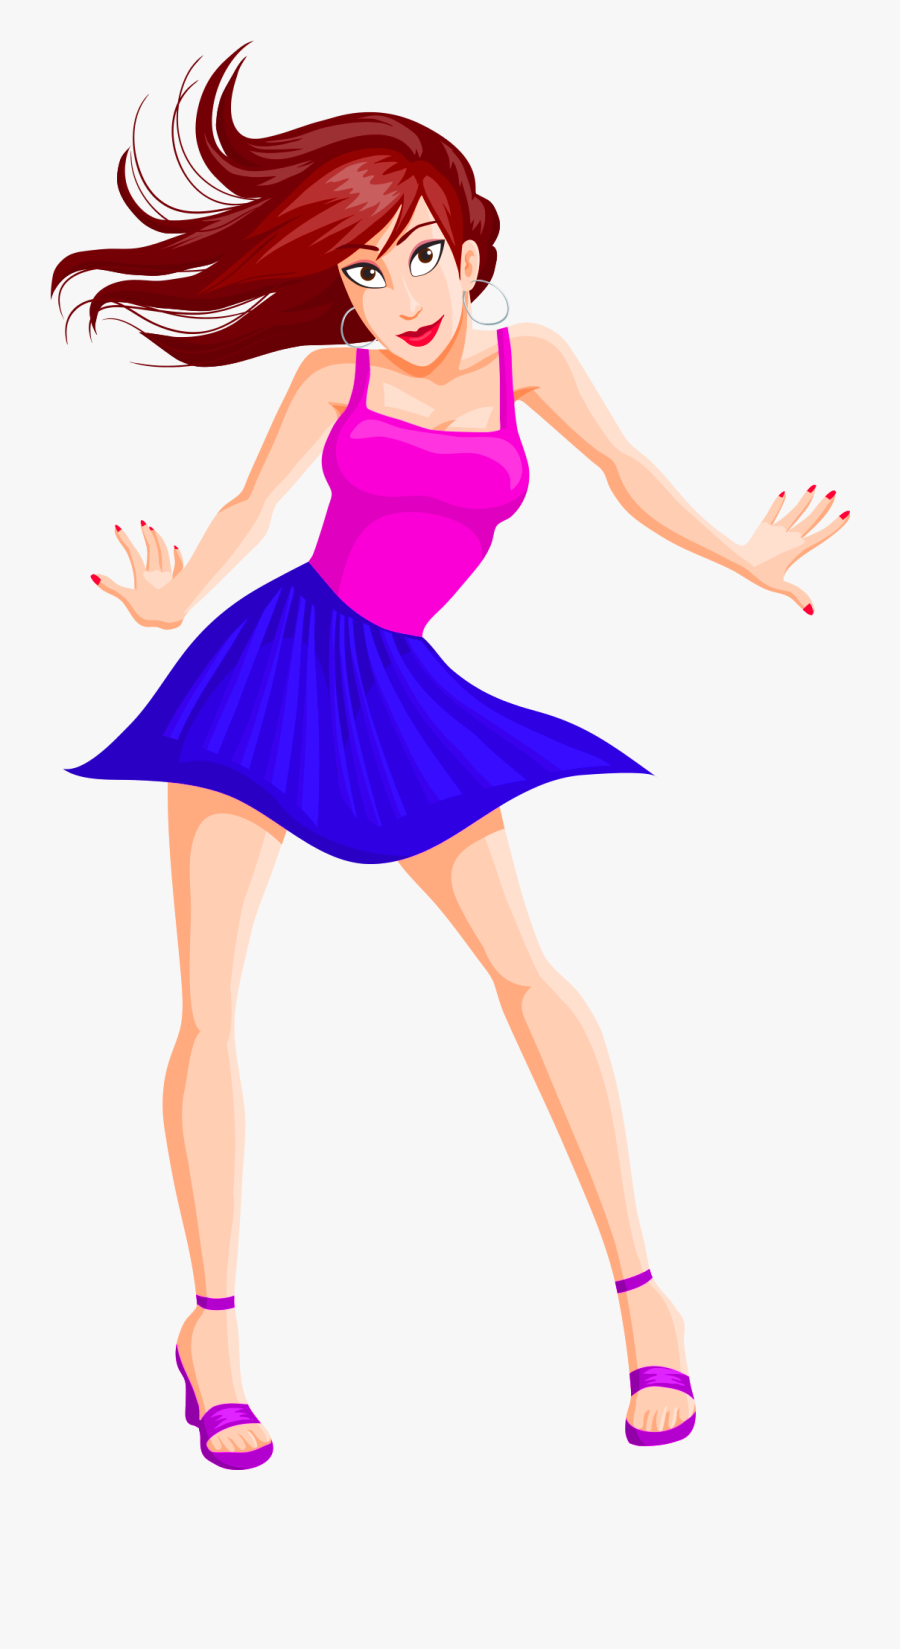 Dance Girl Images Free Clipart Hd - Dancing Girl Transparent Cartoon, Transparent Clipart